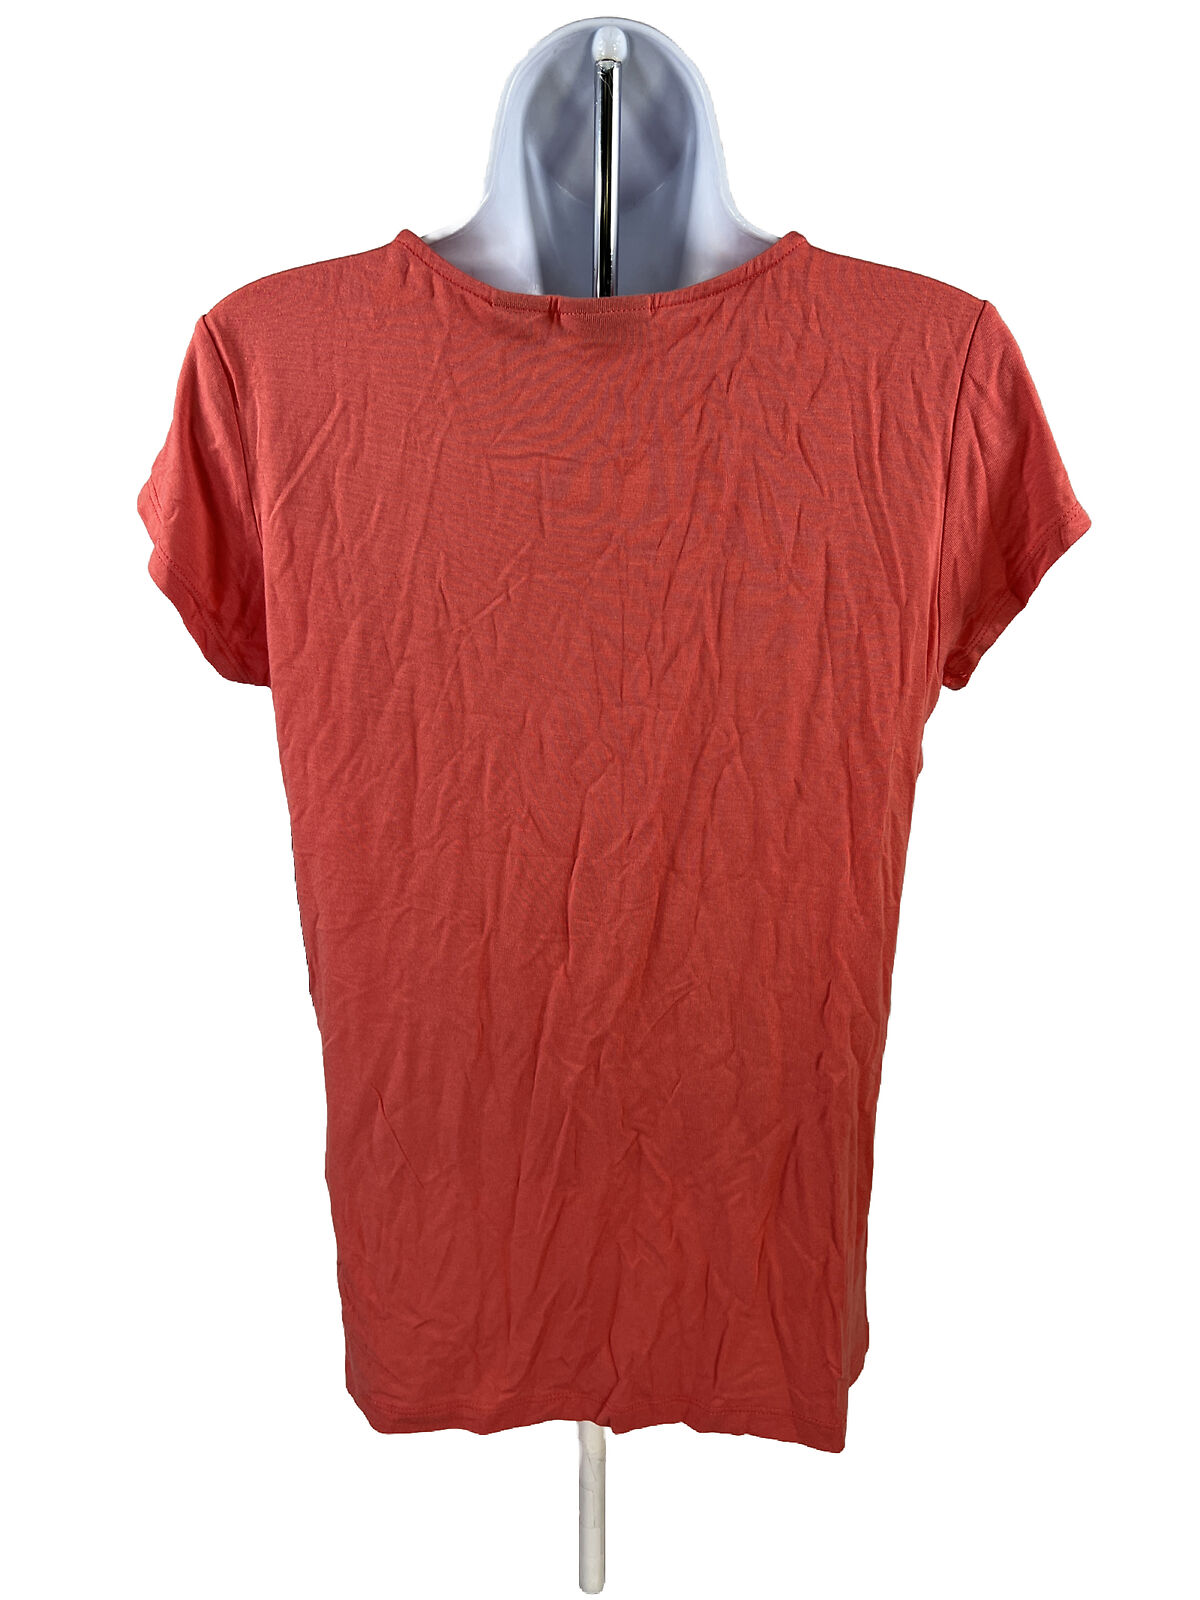 NUEVA camiseta básica de manga corta rosa/naranja de Tahari para mujer - M